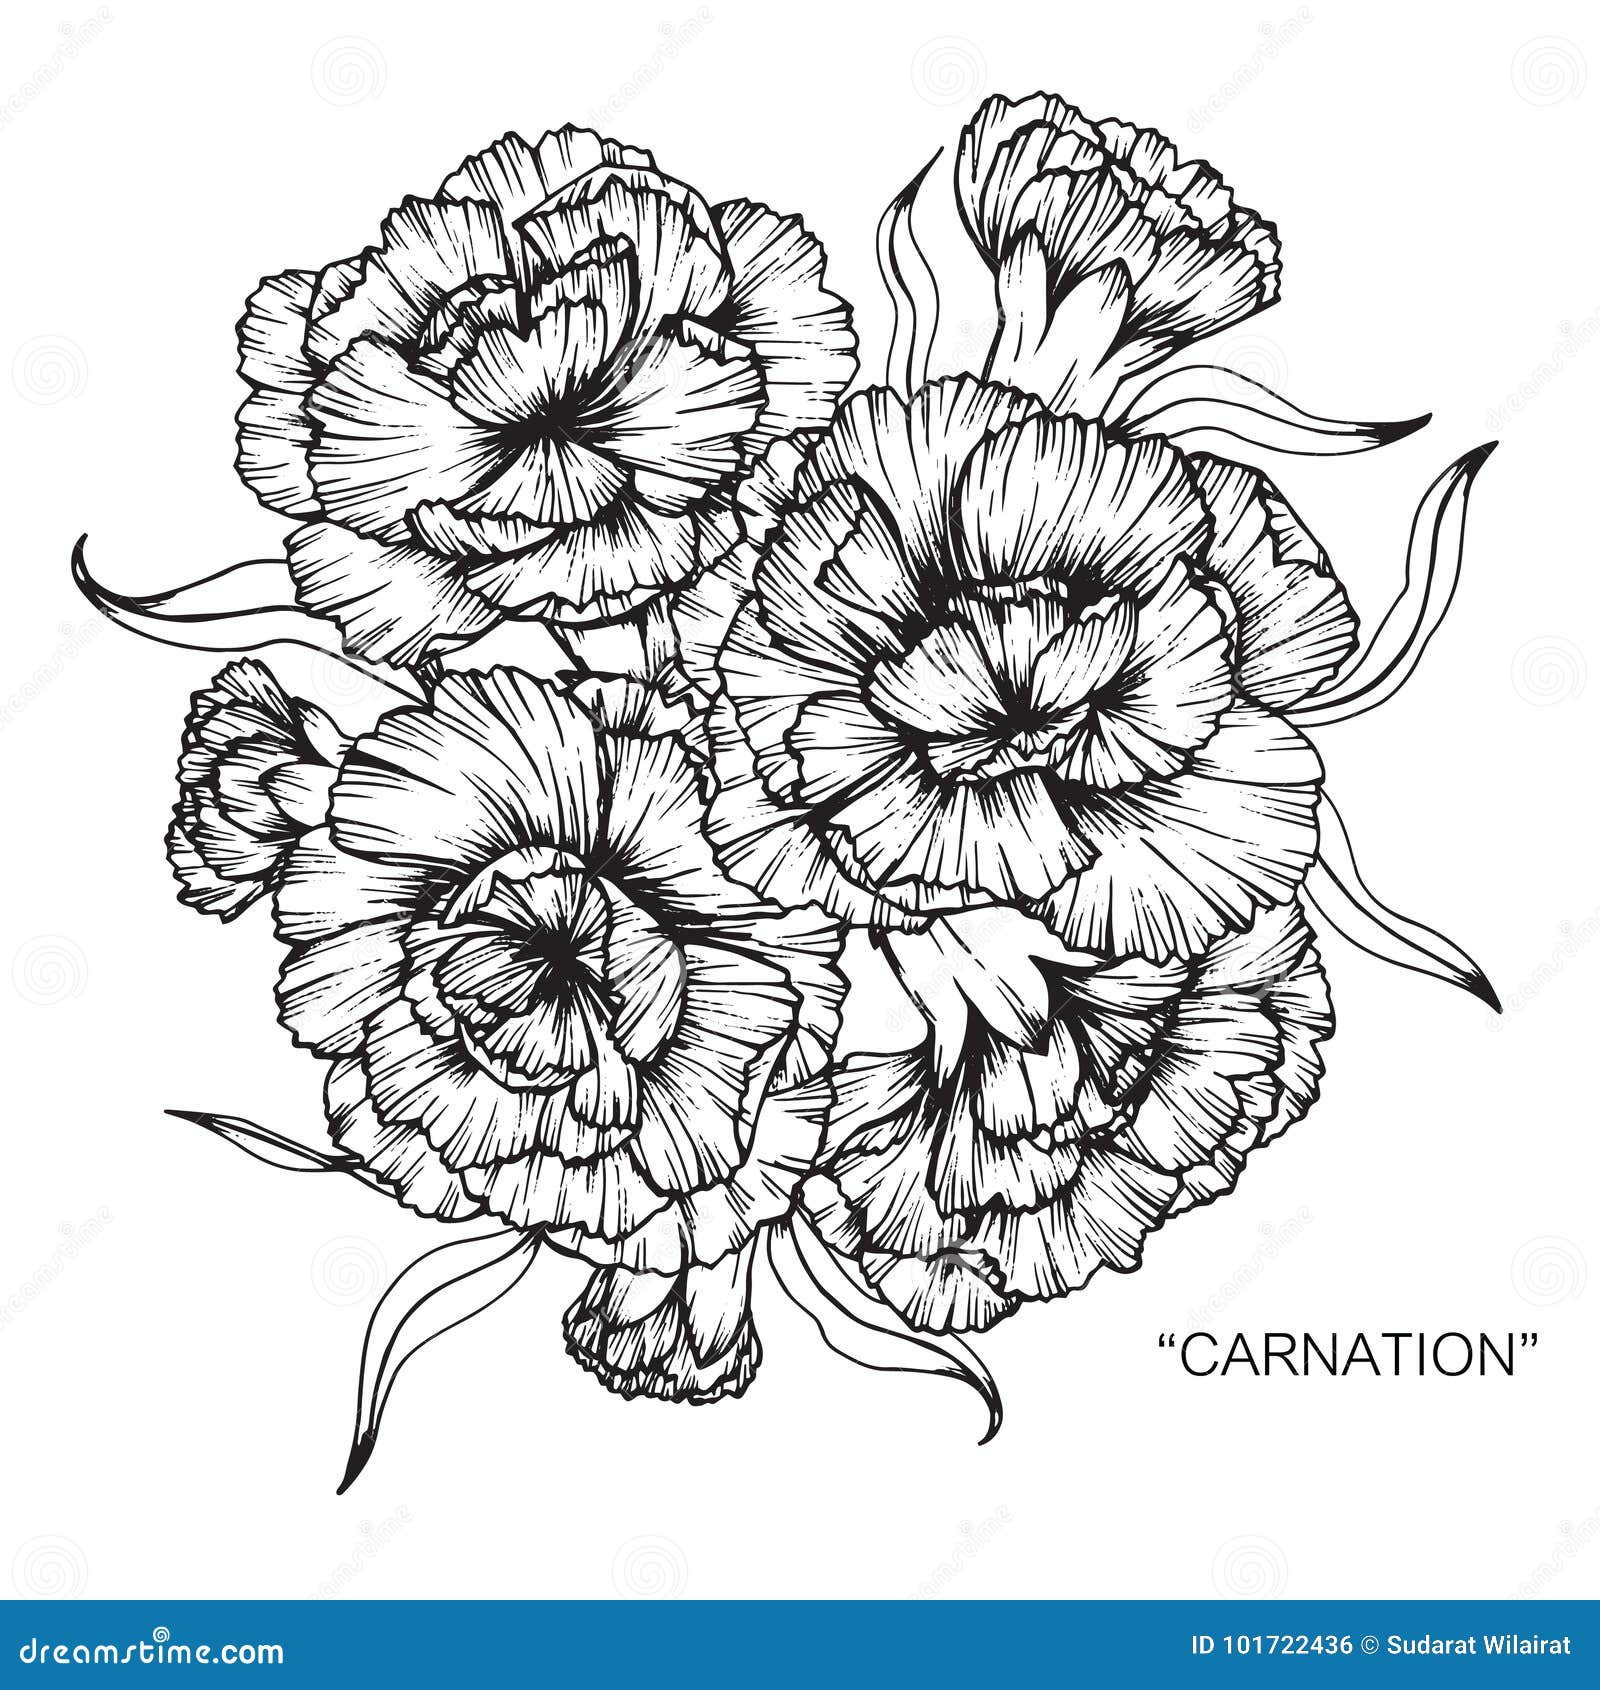 birth month flowers  January  Carnation flower tattoo Birth flower  tattoos White flower tattoos